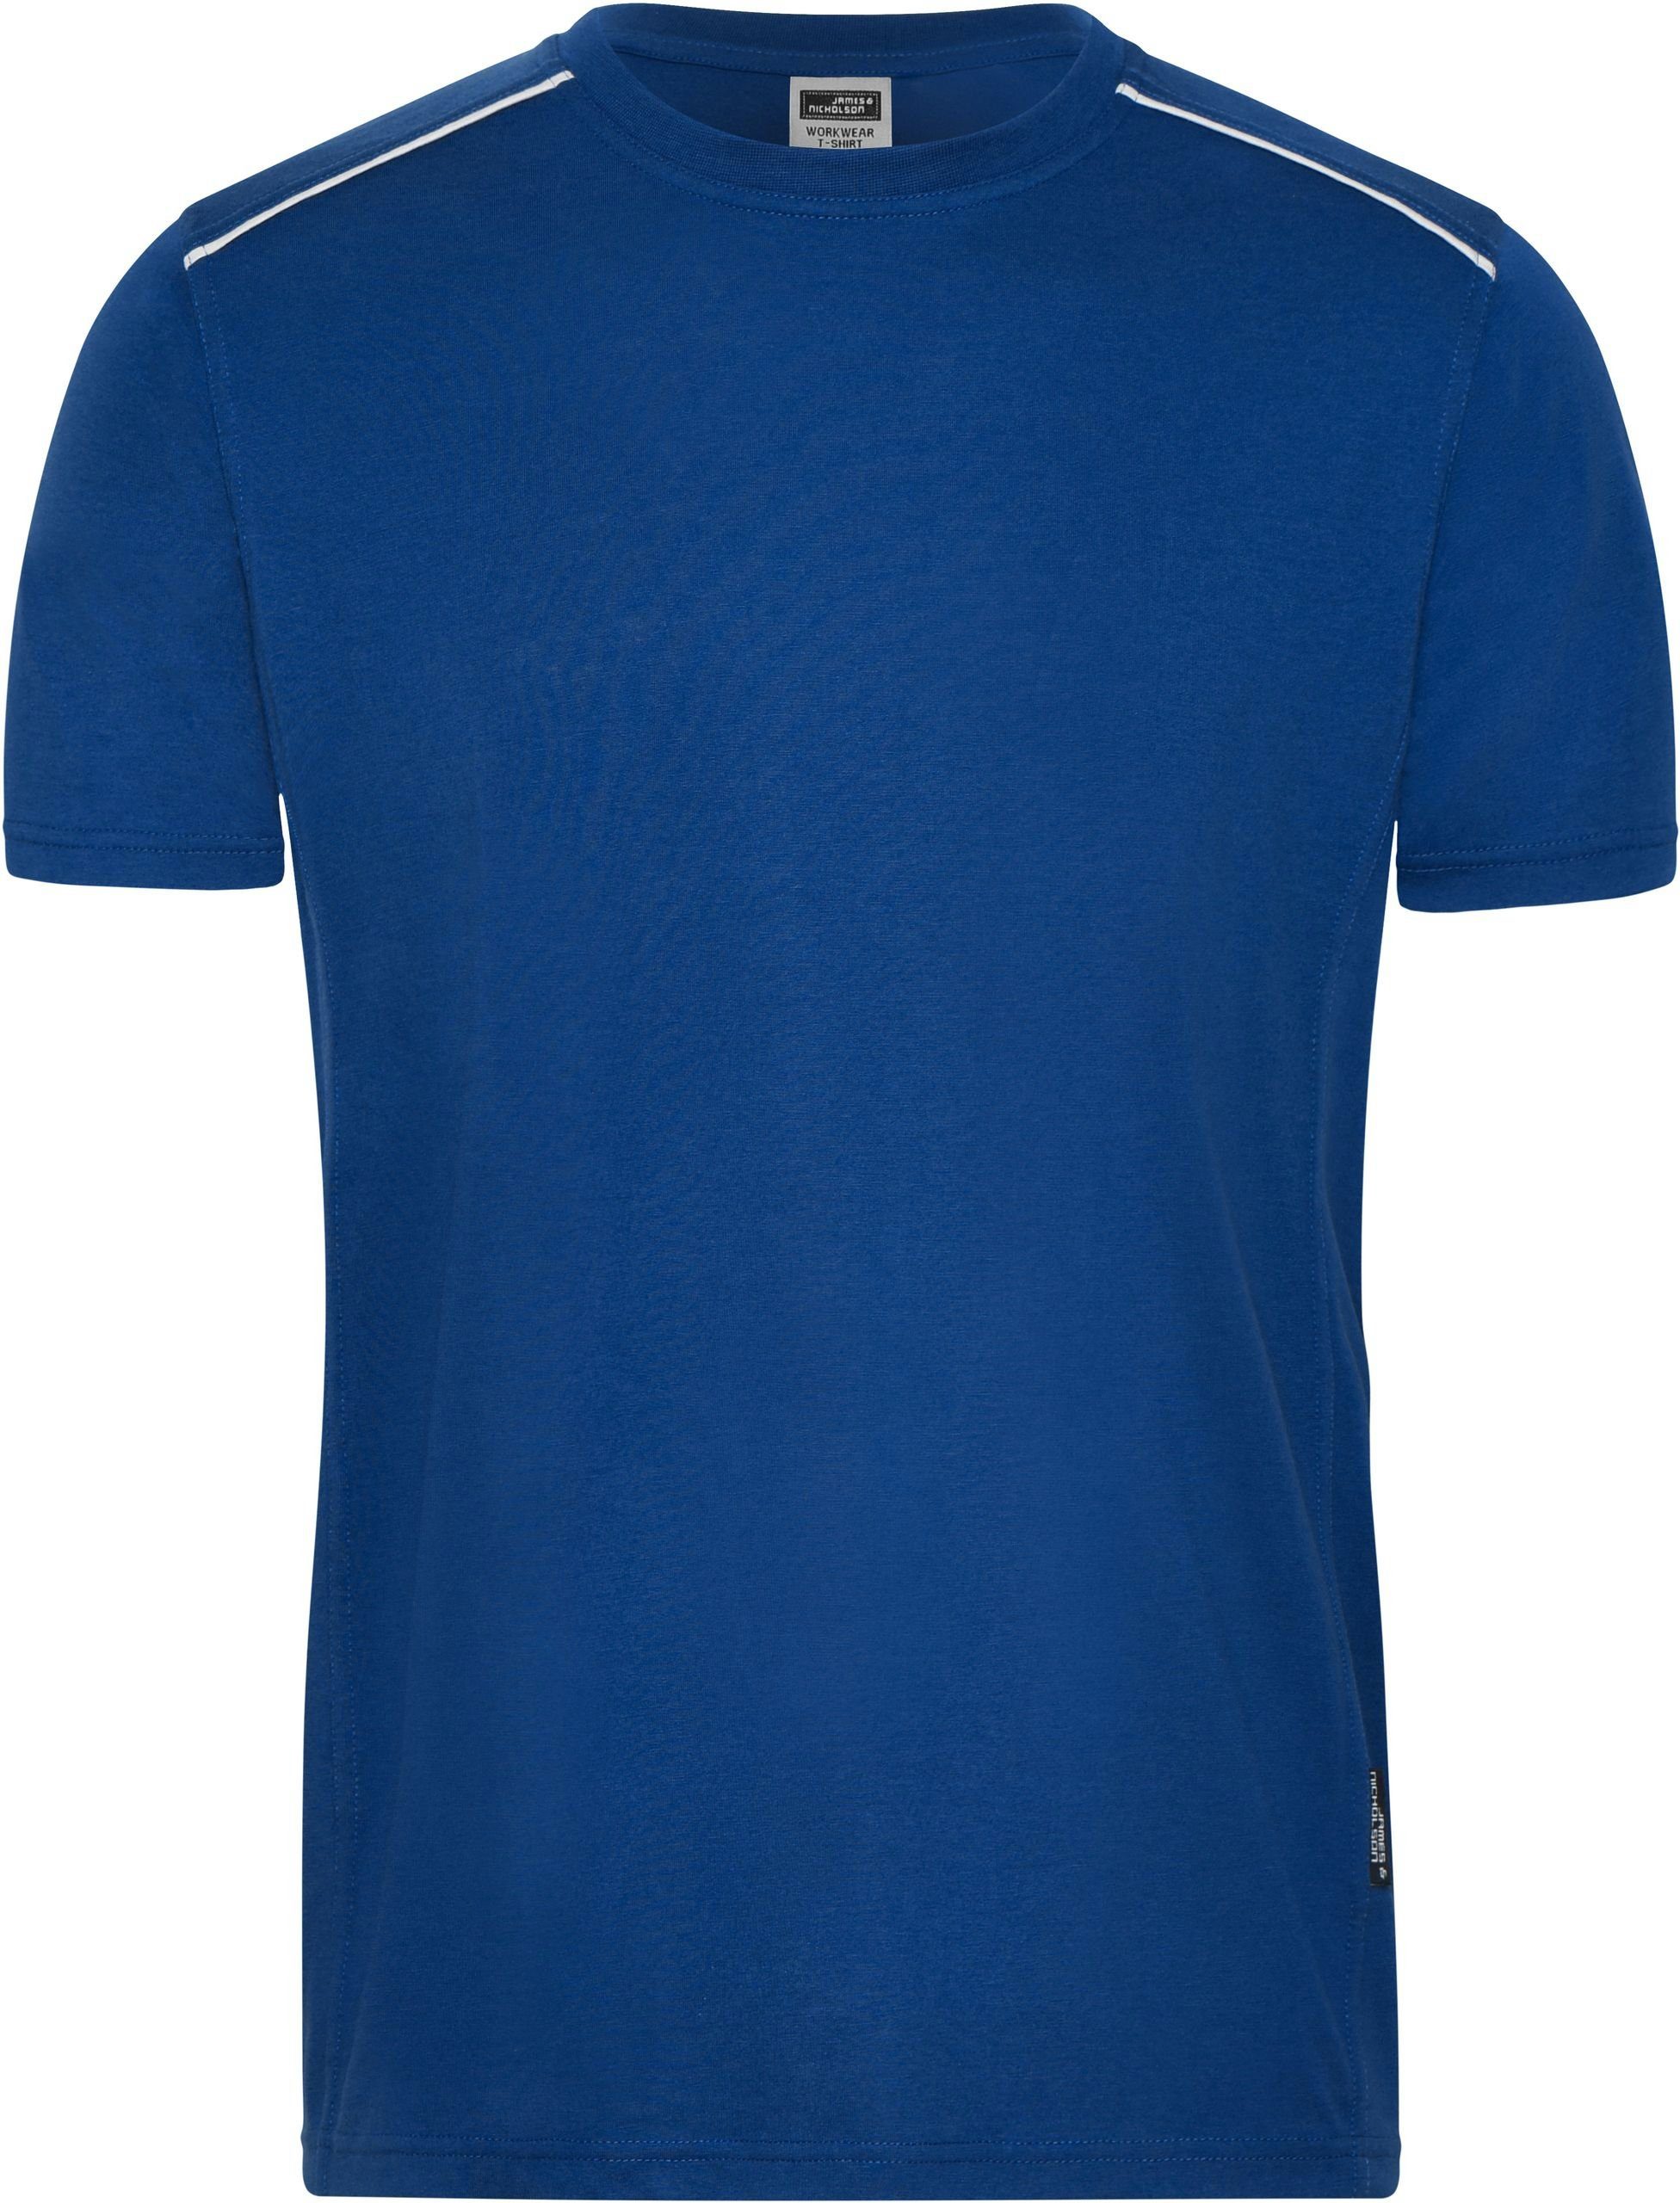 Baumwolle Bio Arbeits James -Solid- Workwear Nicholson & FaS50890 T-Shirt Navy T-Shirt